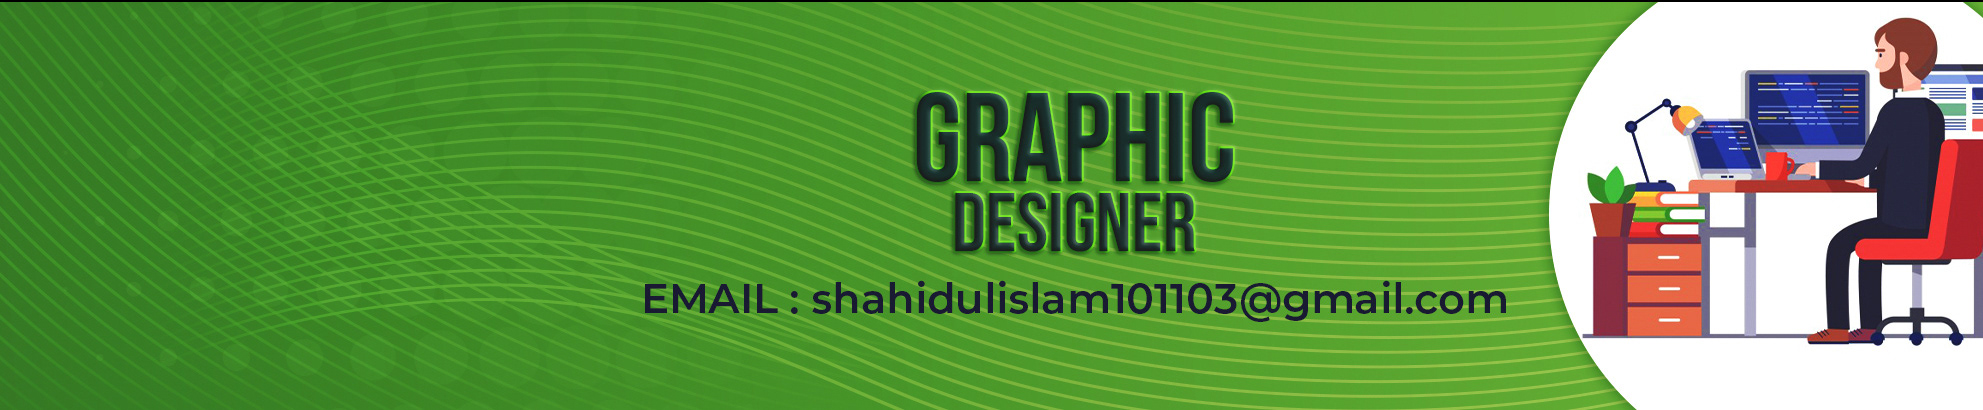 Shahidul Islam's profile banner